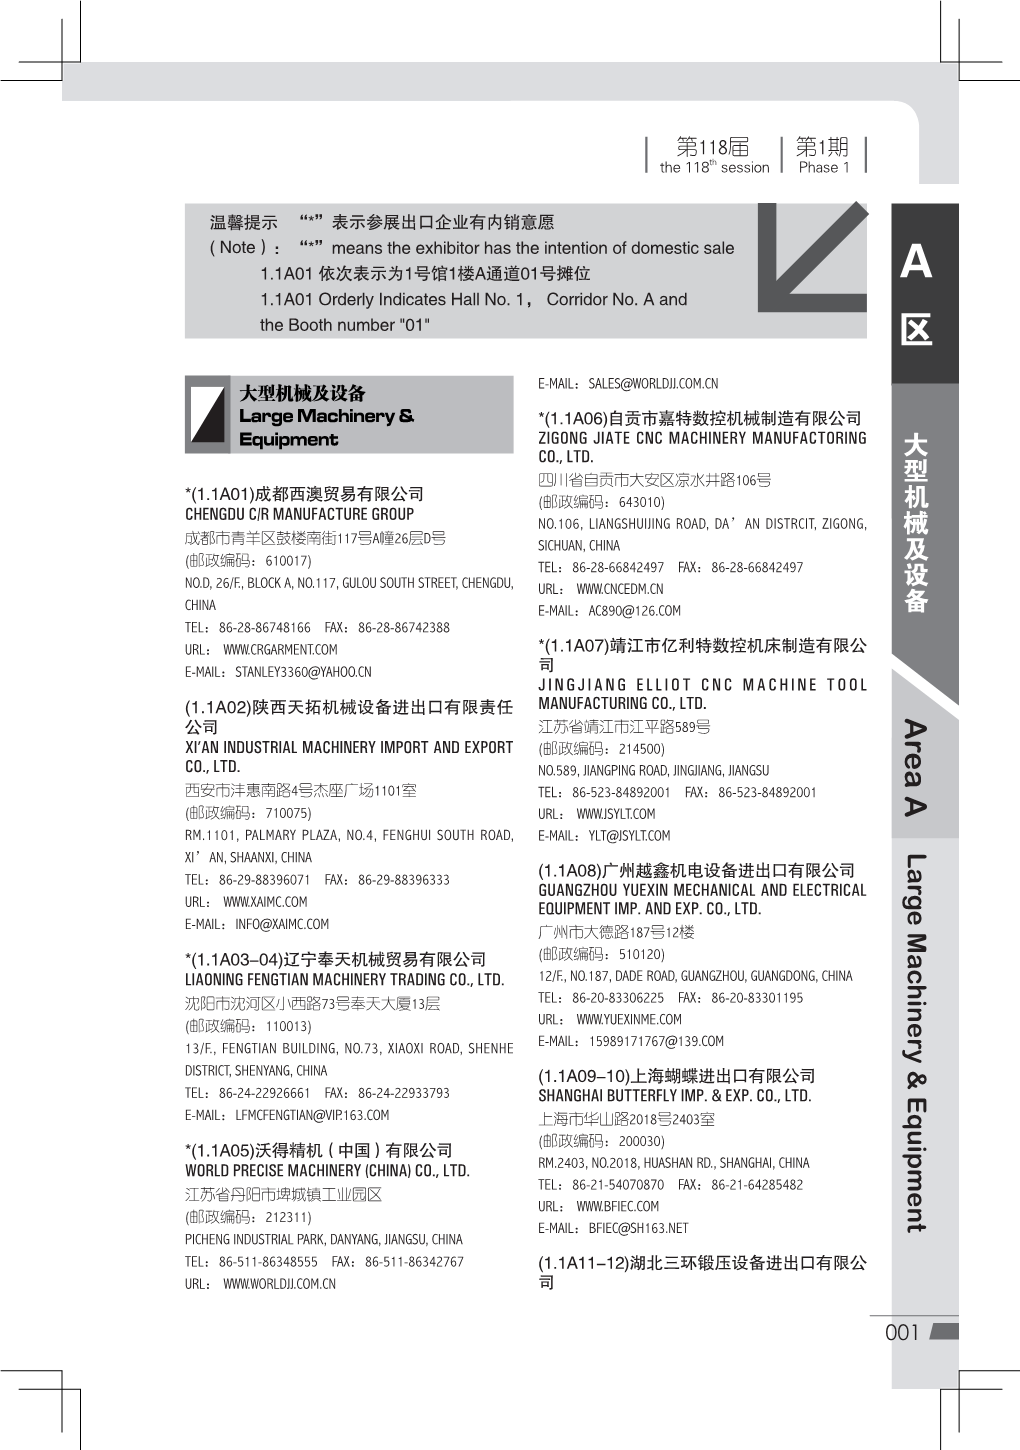 Area a 公司 江苏省靖江市江平路589号 XI’AN INDUSTRIAL MACHINERY IMPORT and EXPORT (邮政编码：214500) CO., LTD